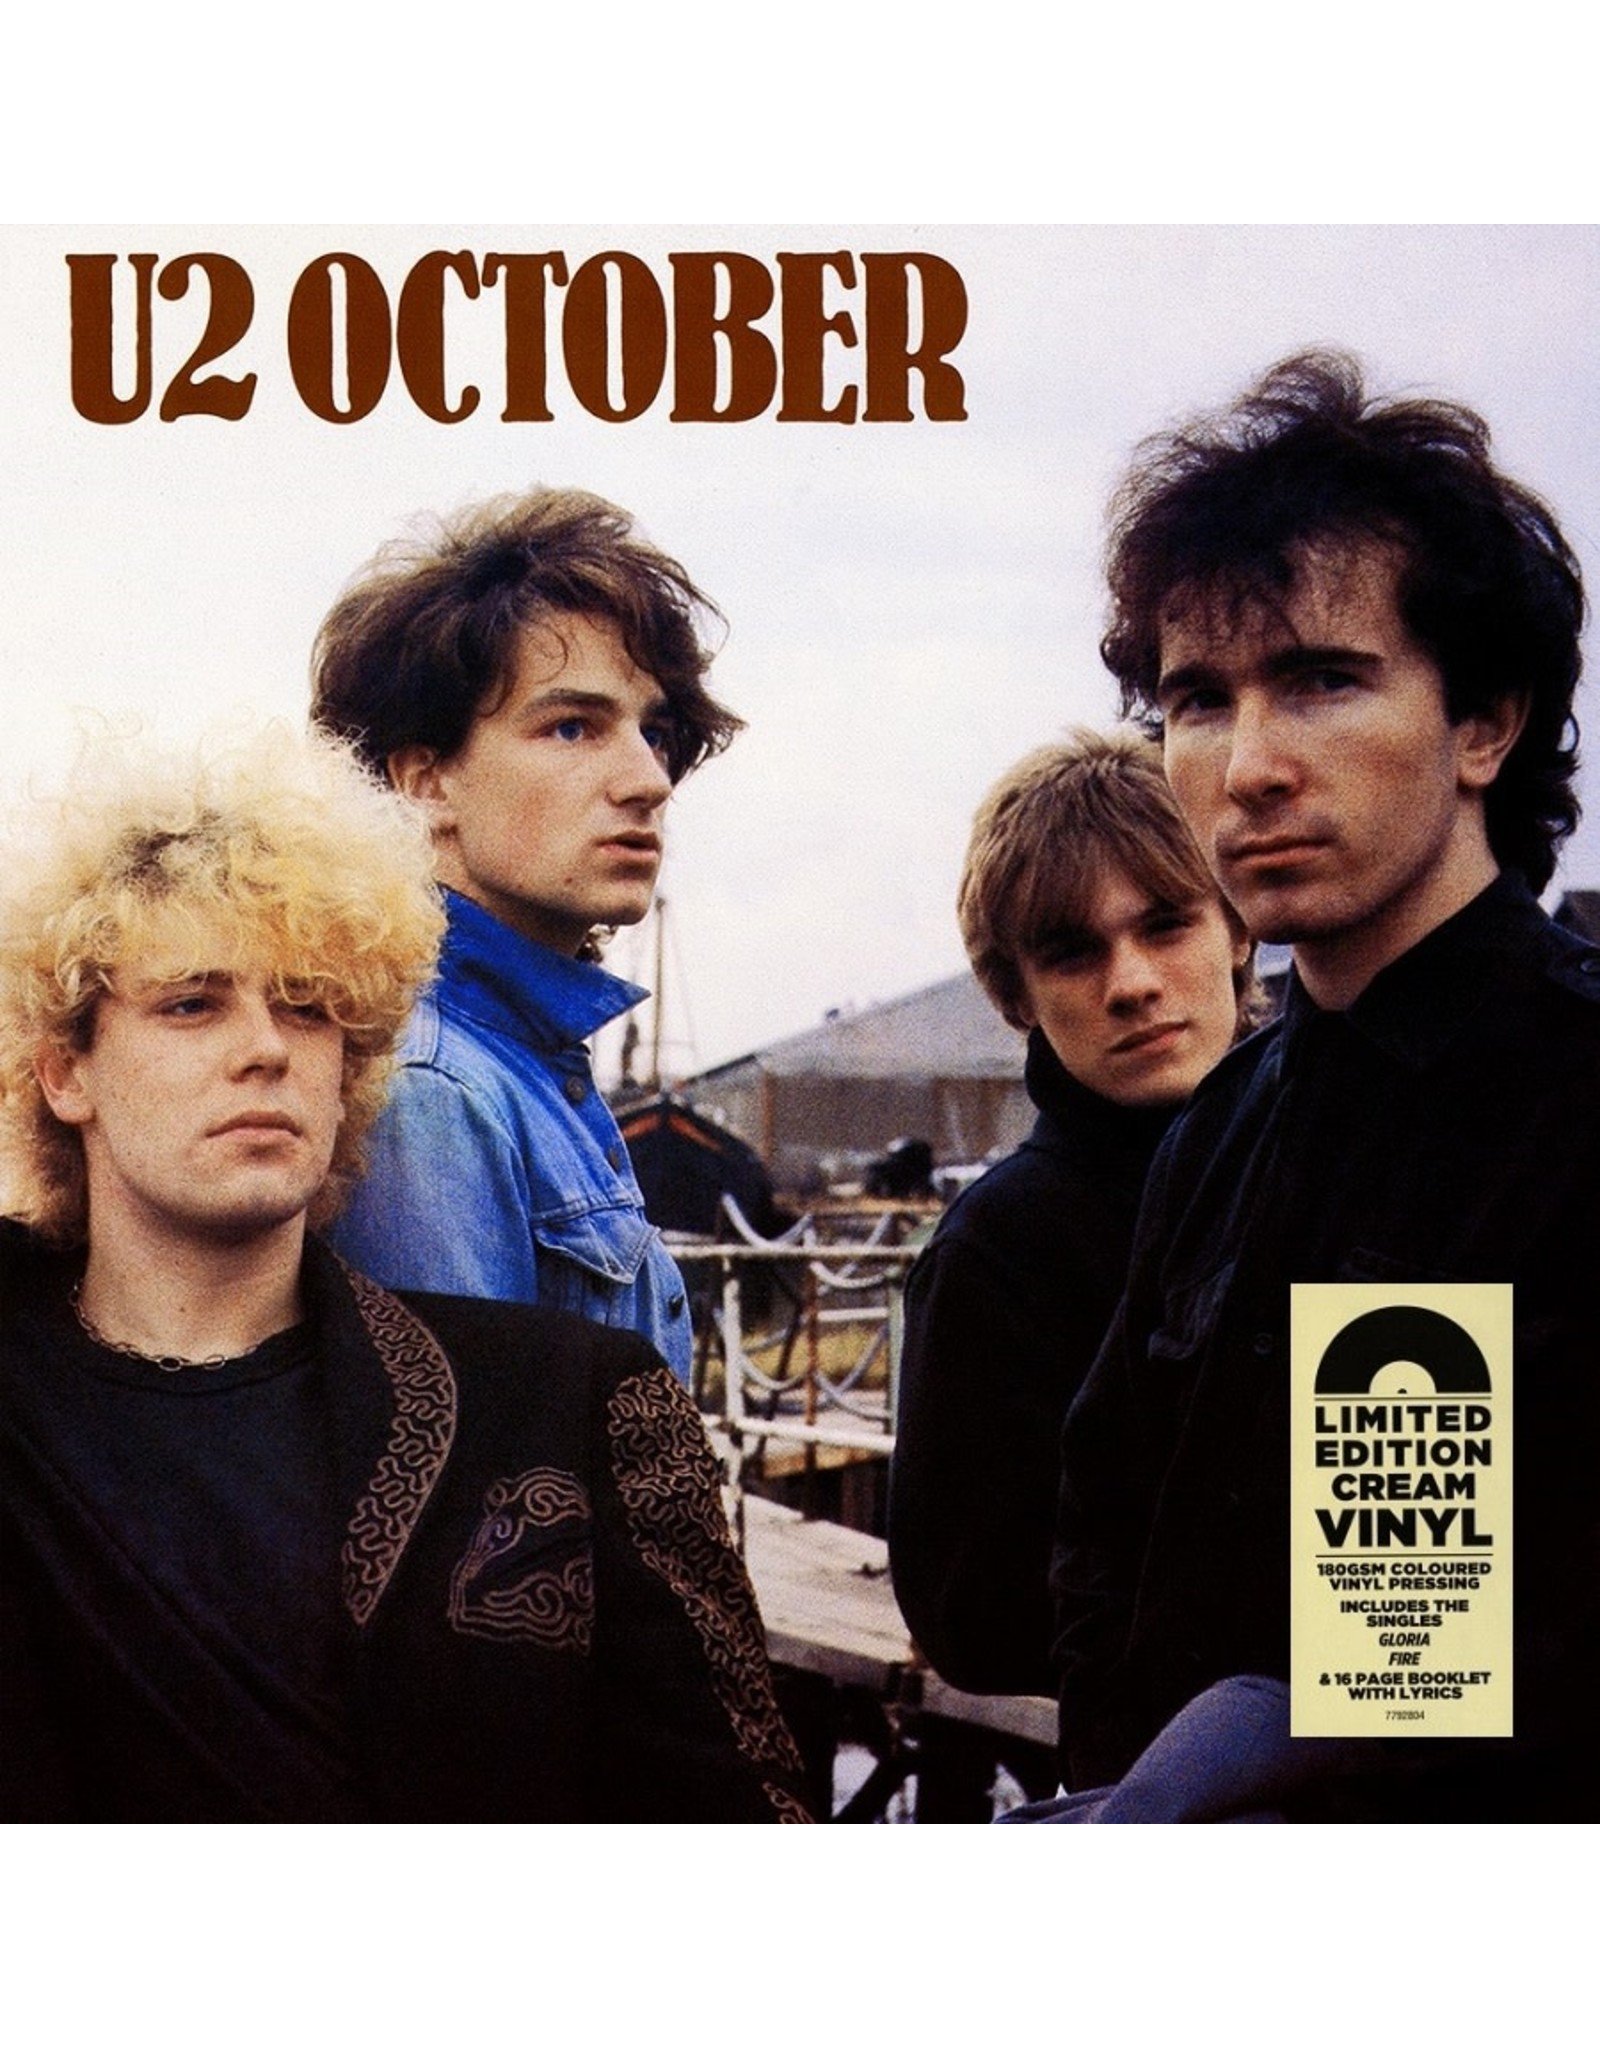 U2 - October (Exclusive Cream Vinyl)